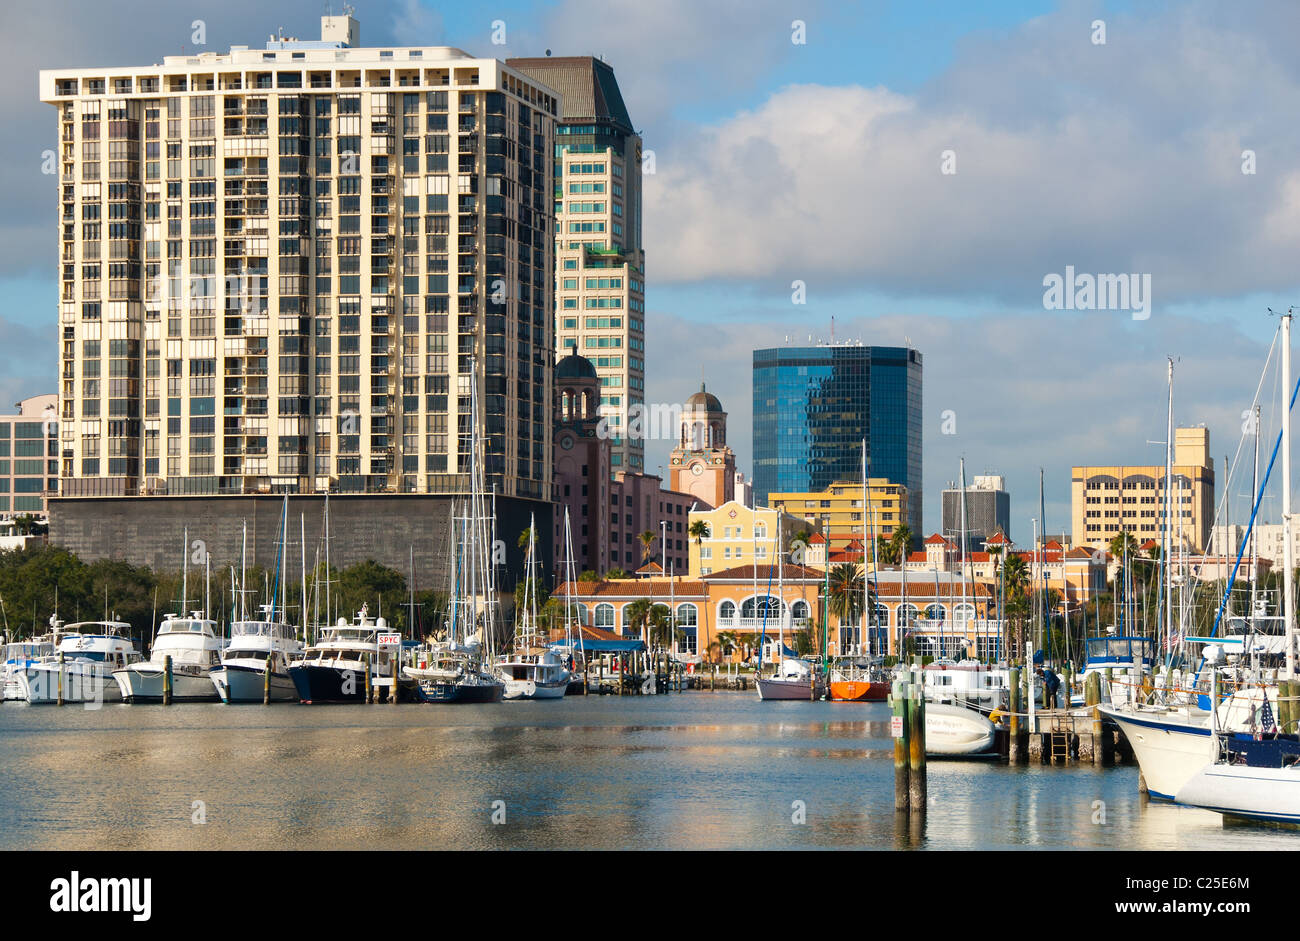 City center and yacht basin facing Tampa Bay in St. Petersburg, Florida, USA Stock Photo